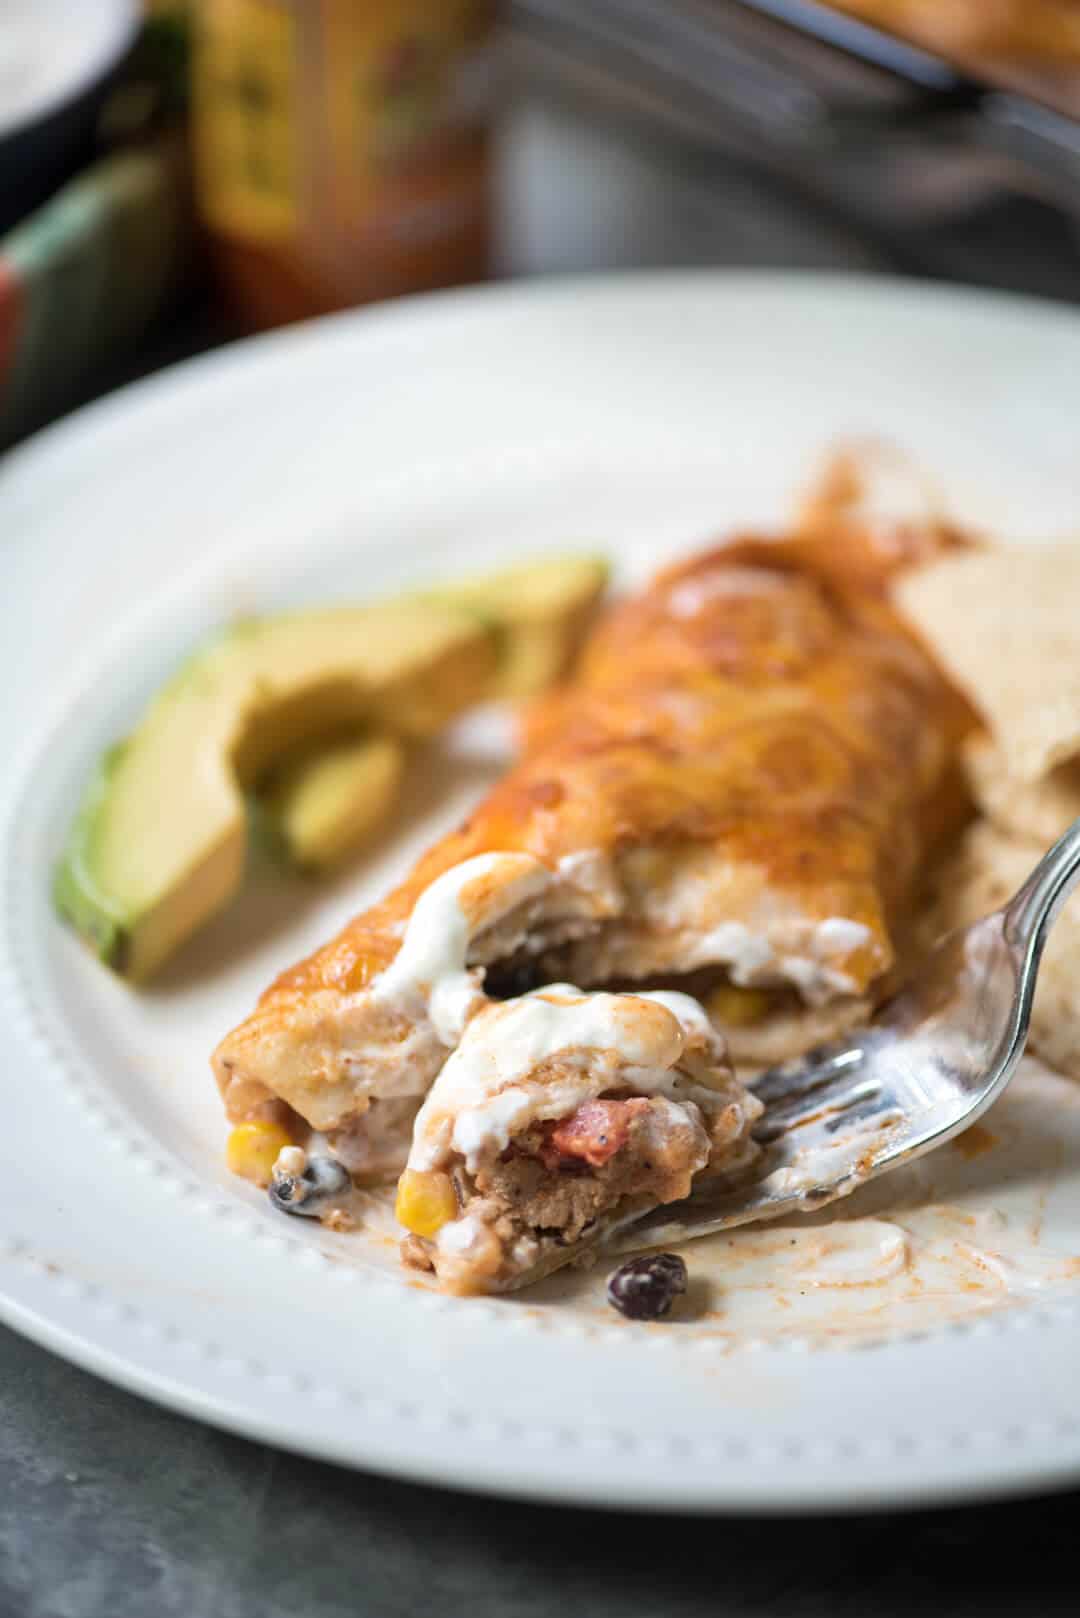 A fork pulling away a bite of enchilada.